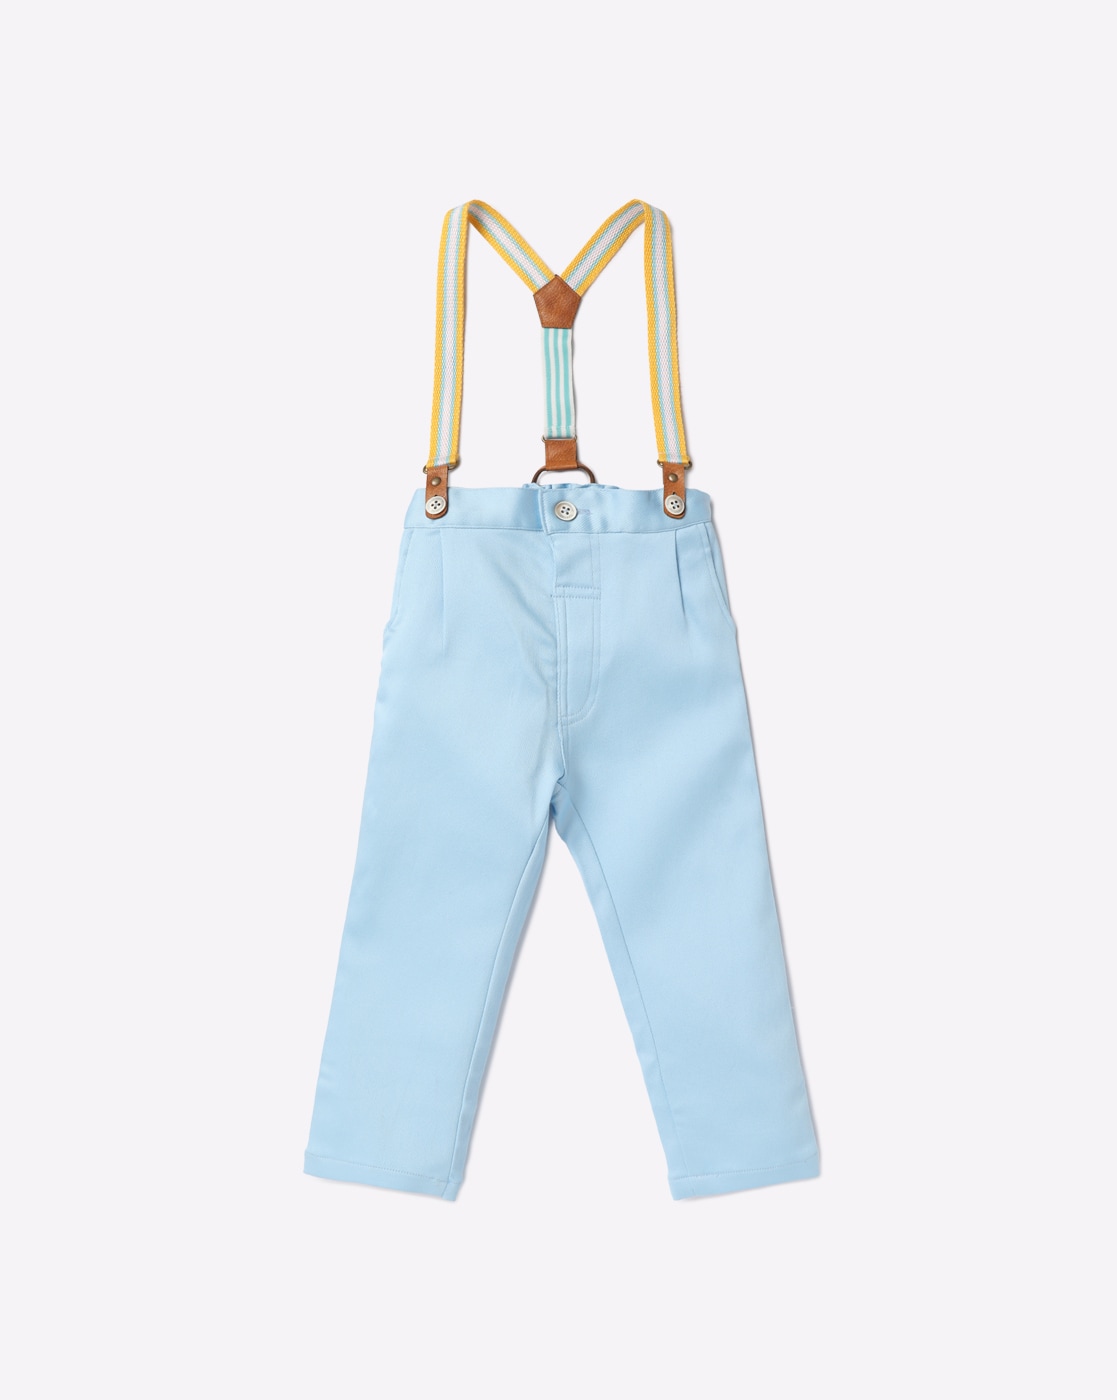 Buy Boys Linen Pants With Suspenders bow Tie  Linen Ring Bearer Online in  India  Etsy